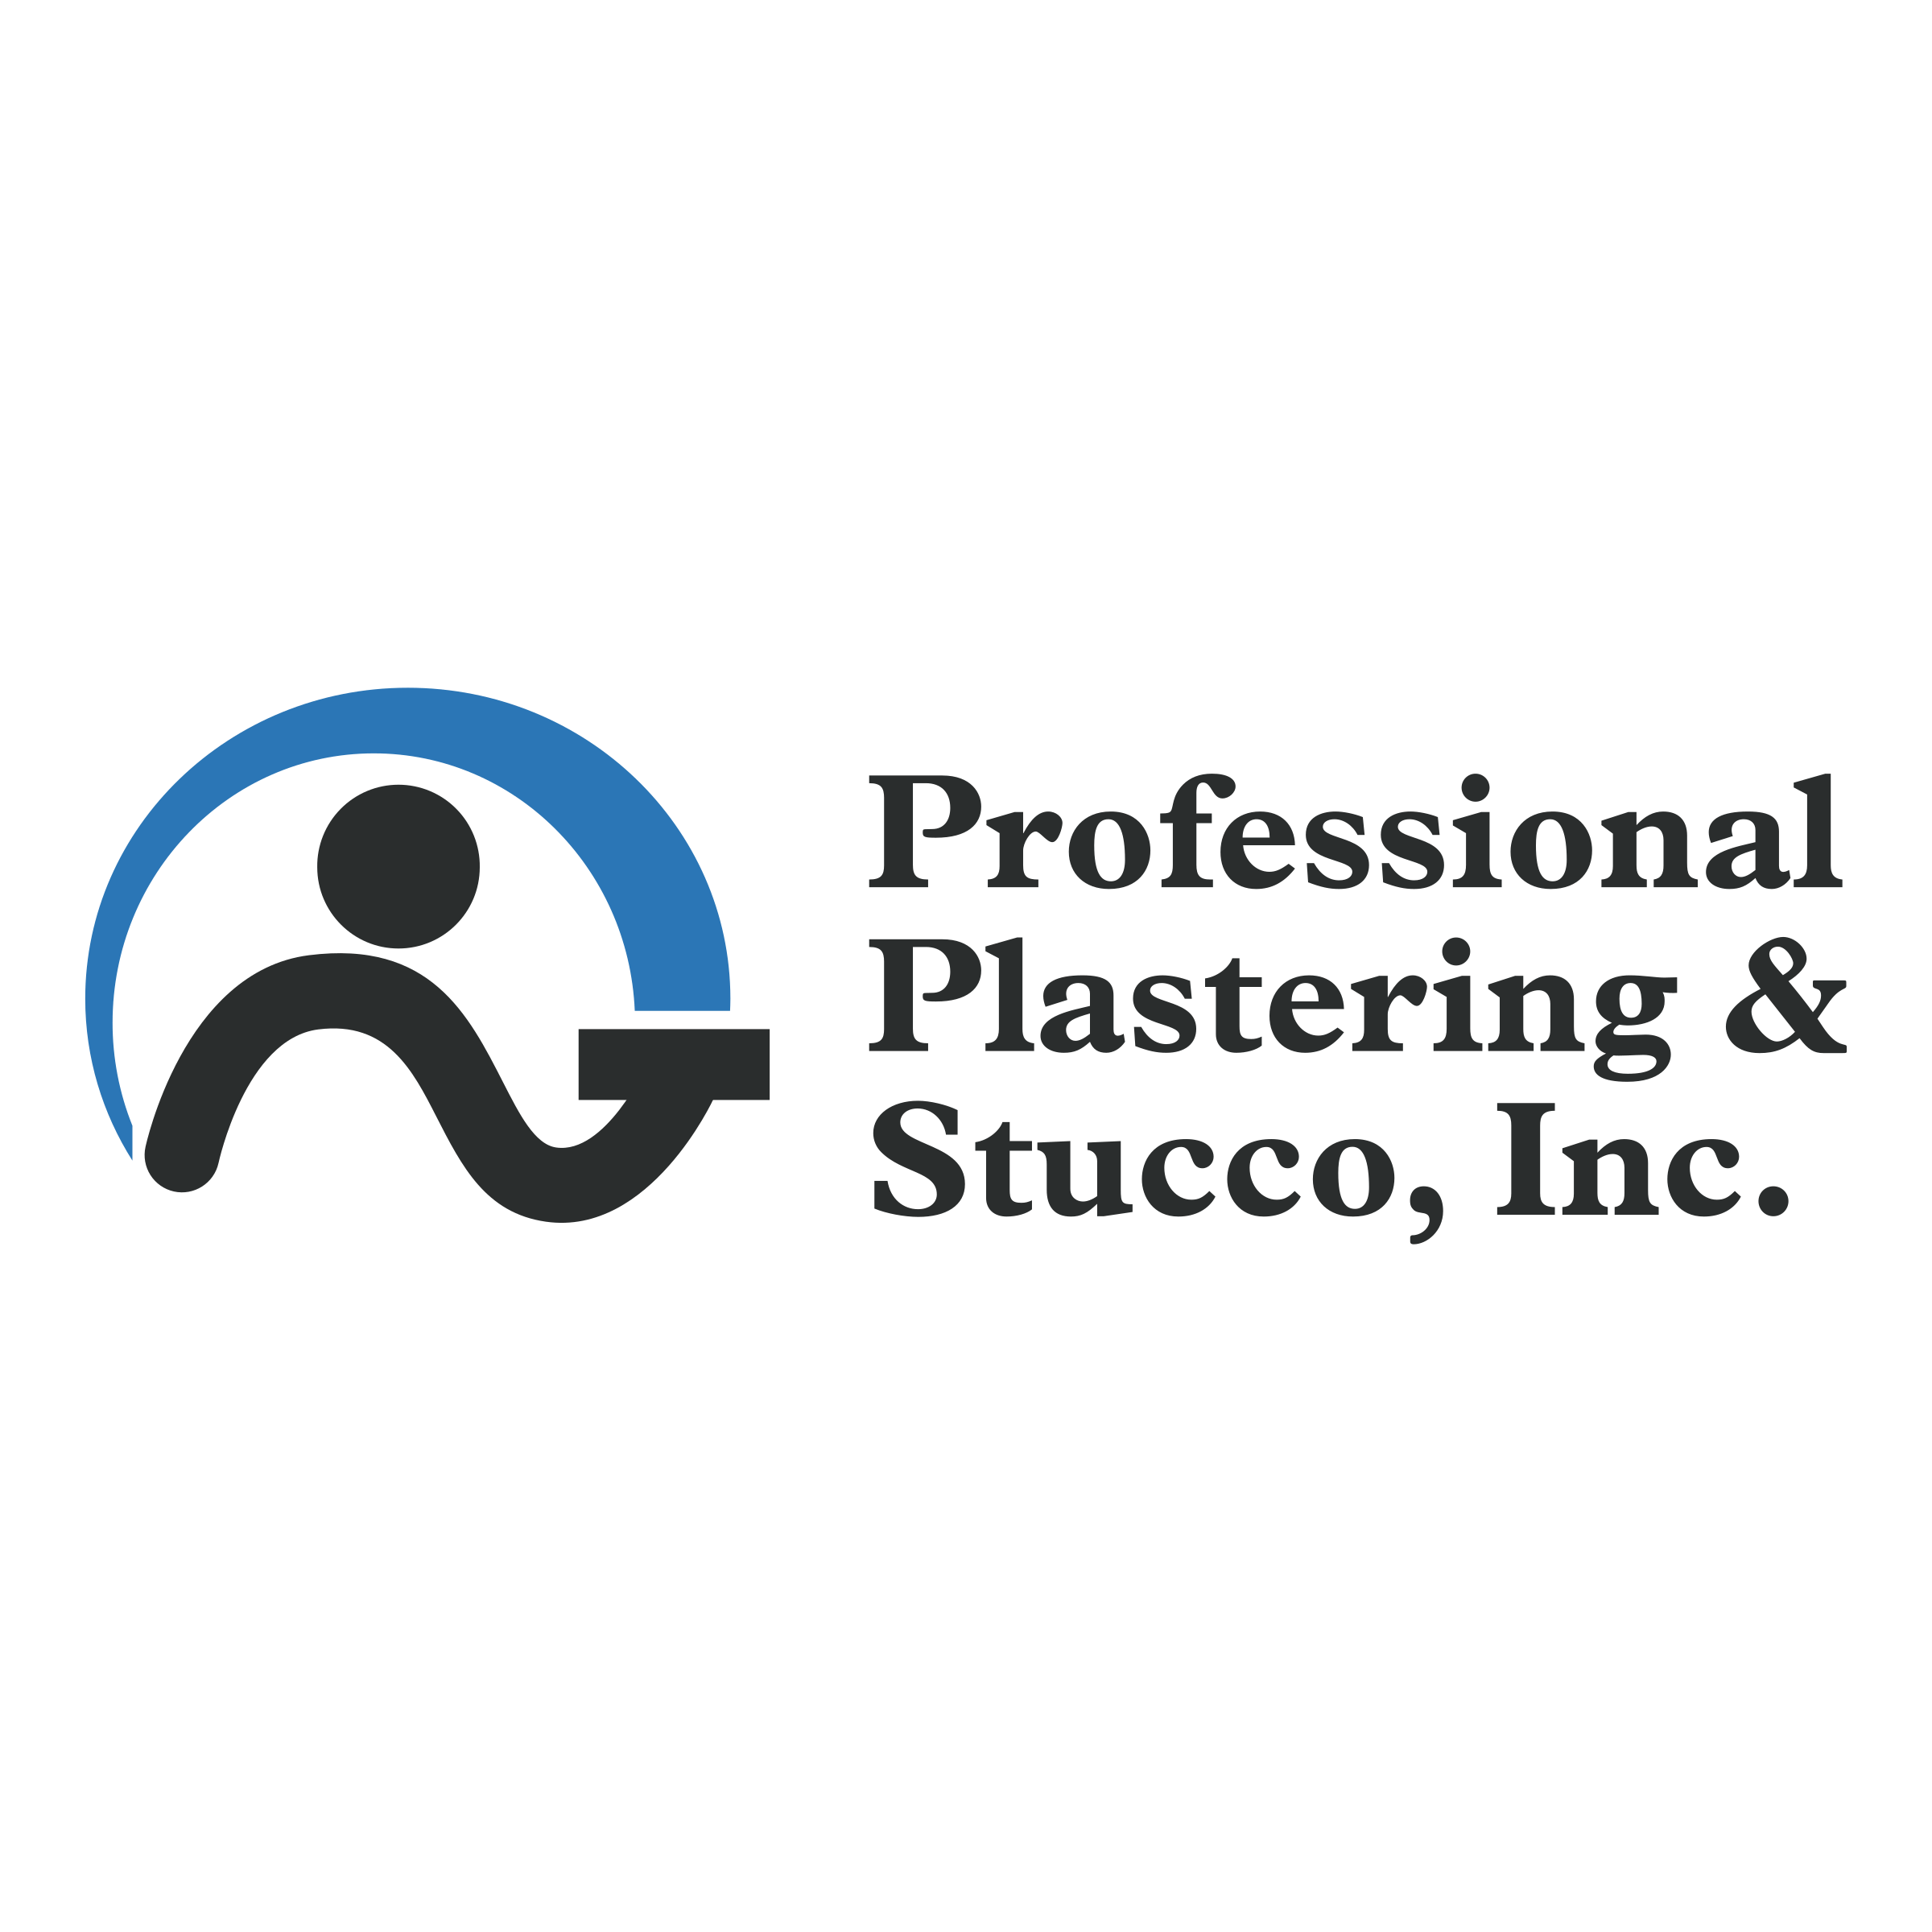 Stucco Logo - Professional Plastering & Stucco Logo PNG Transparent & SVG Vector ...